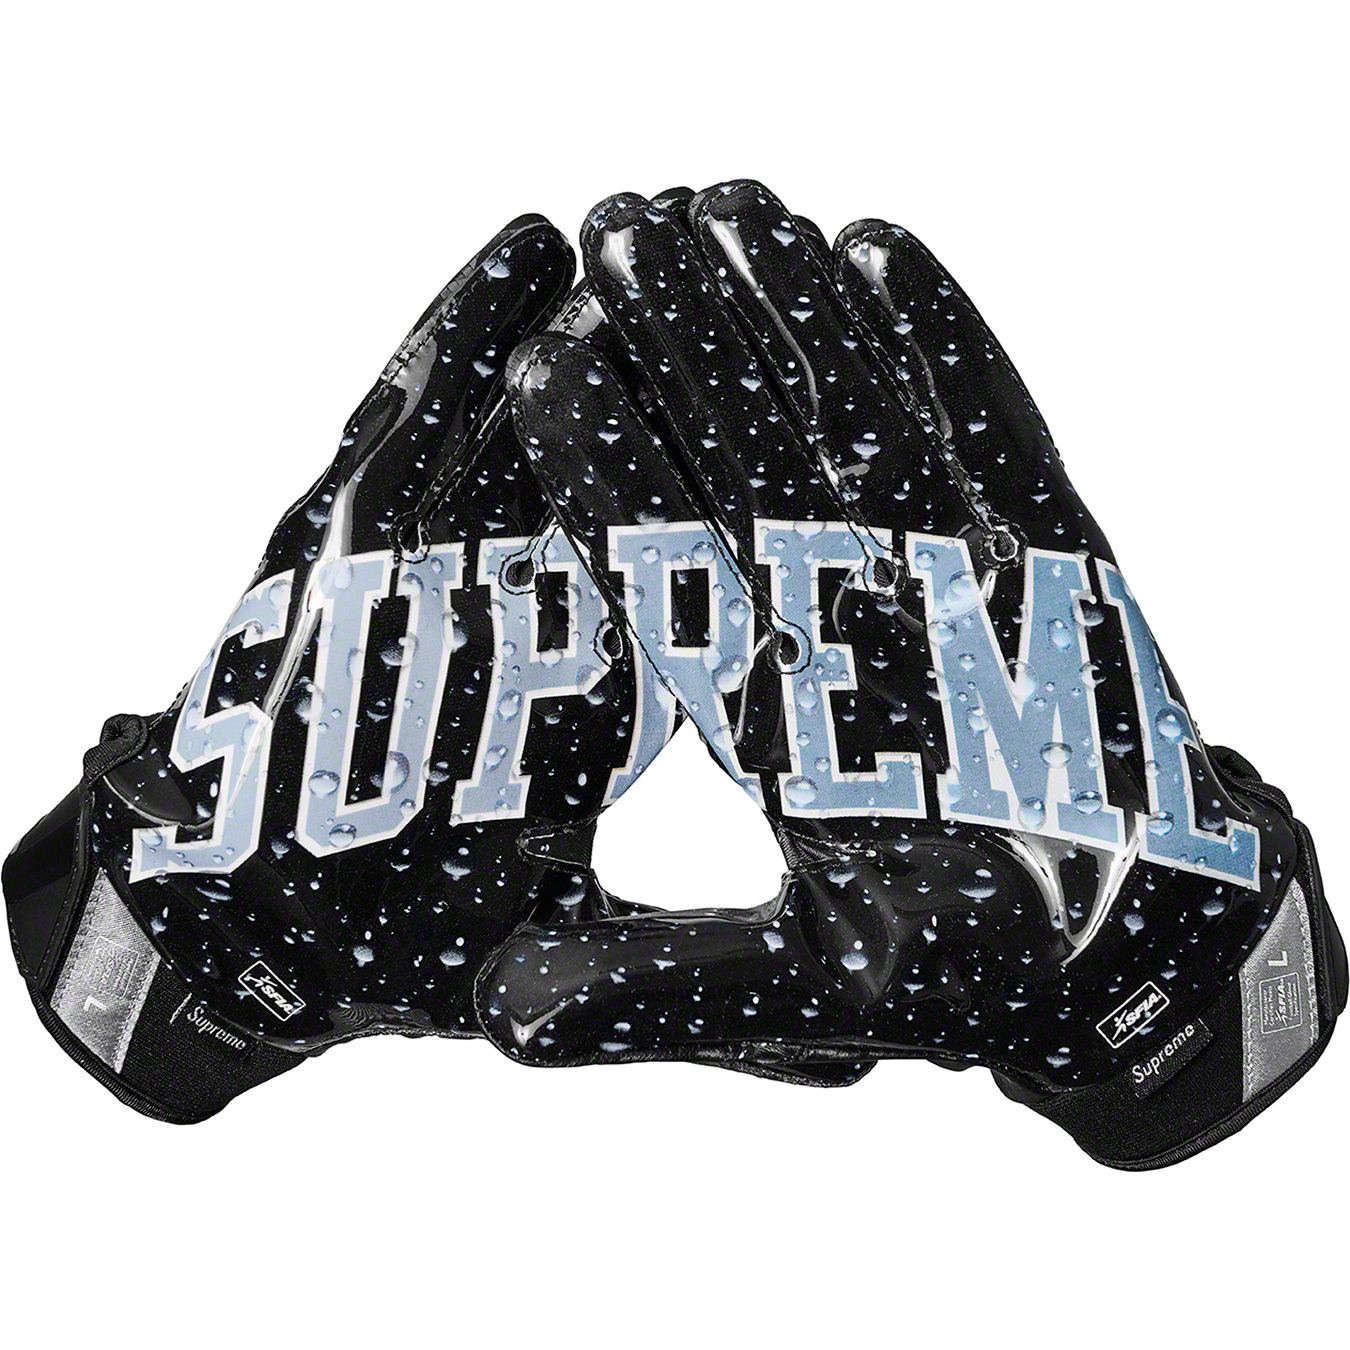 Supreme+Nike+Vapor+Jet+4.0+Football+Gloves+Red+Black+Hype+Size+Medium+Fw18+A15  for sale online